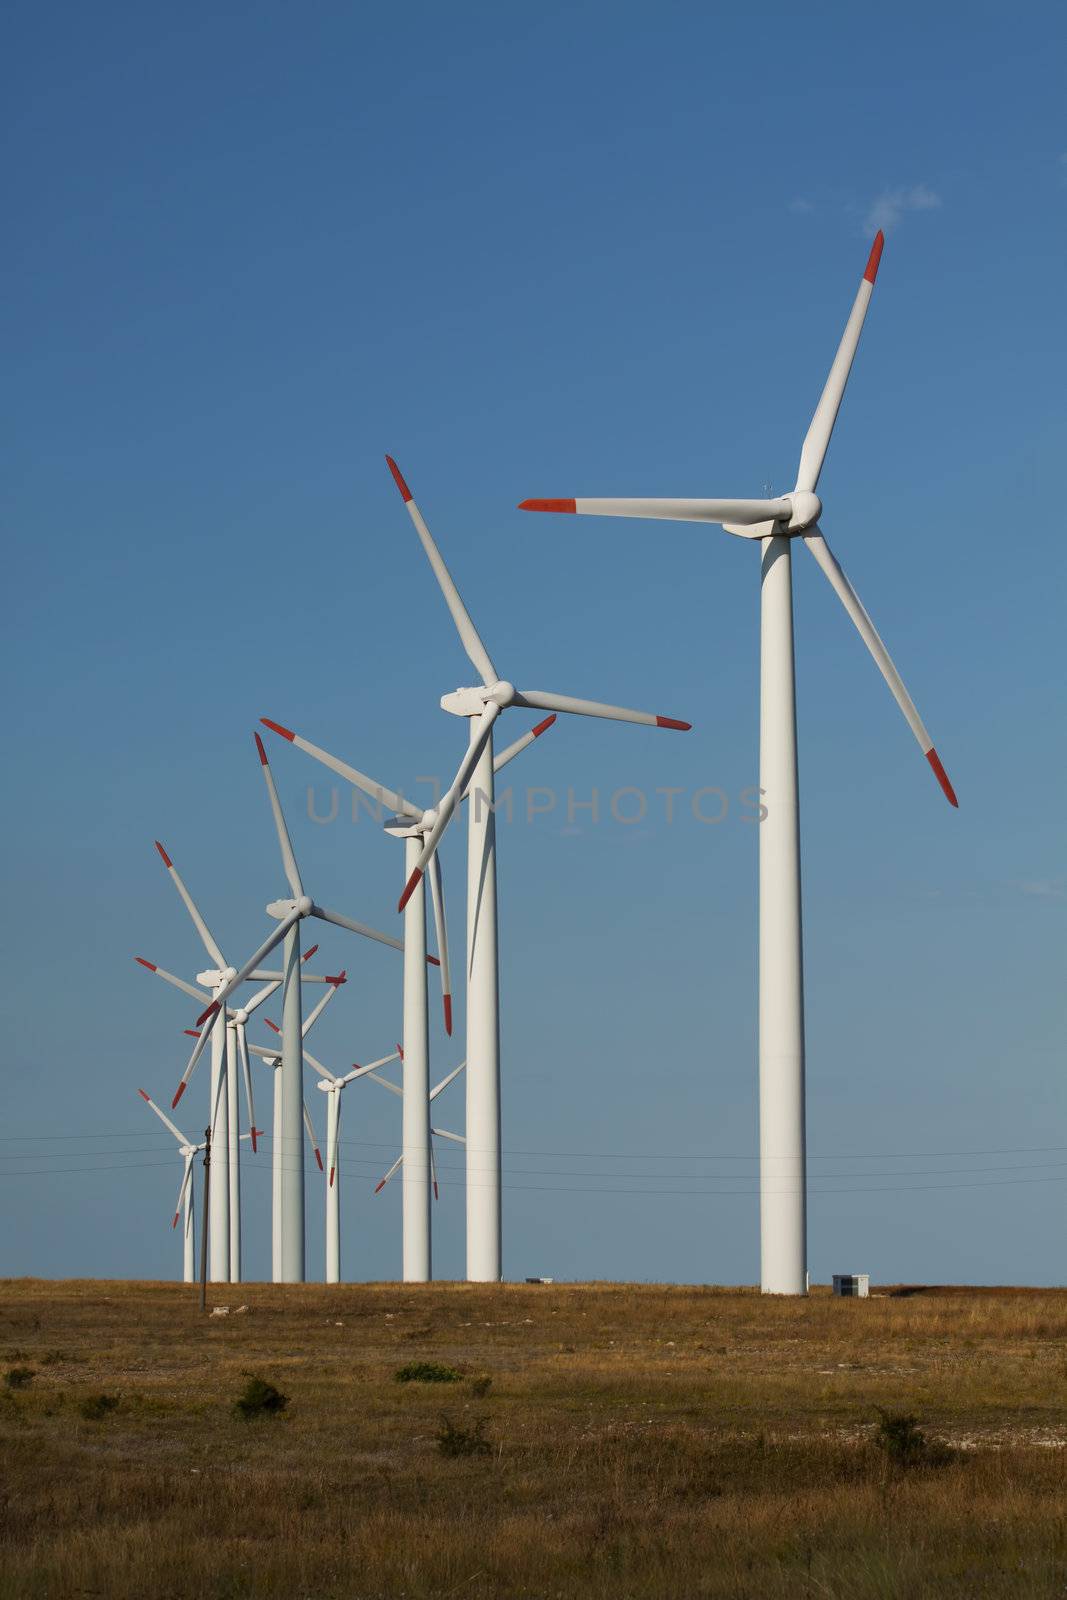 Series of wind power generators in a grass field by Lamarinx